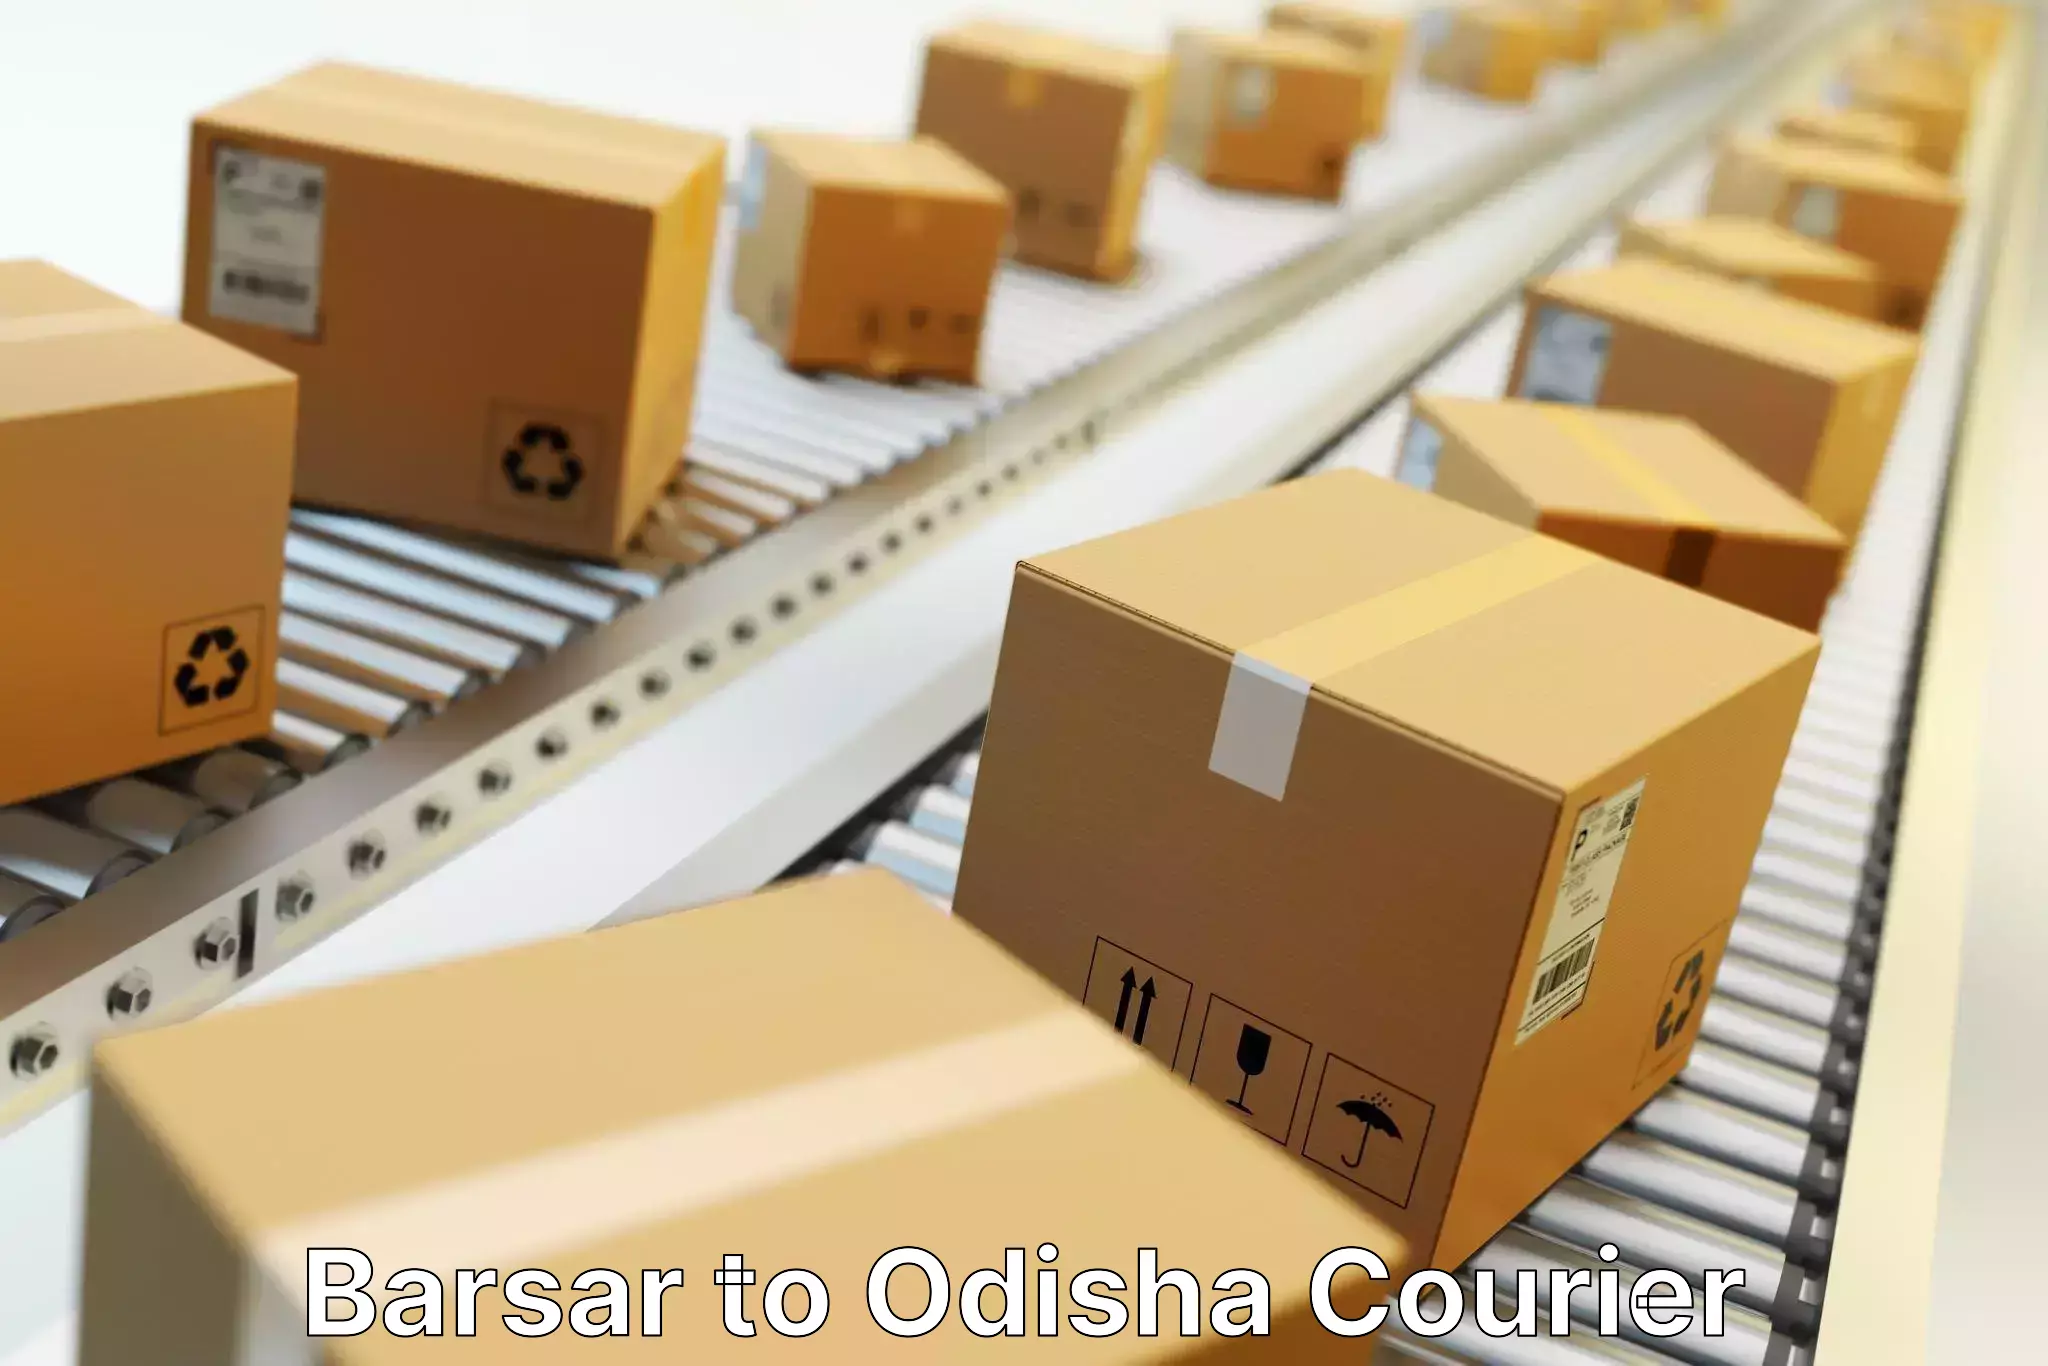 Nationwide delivery network Barsar to Kishorenagar